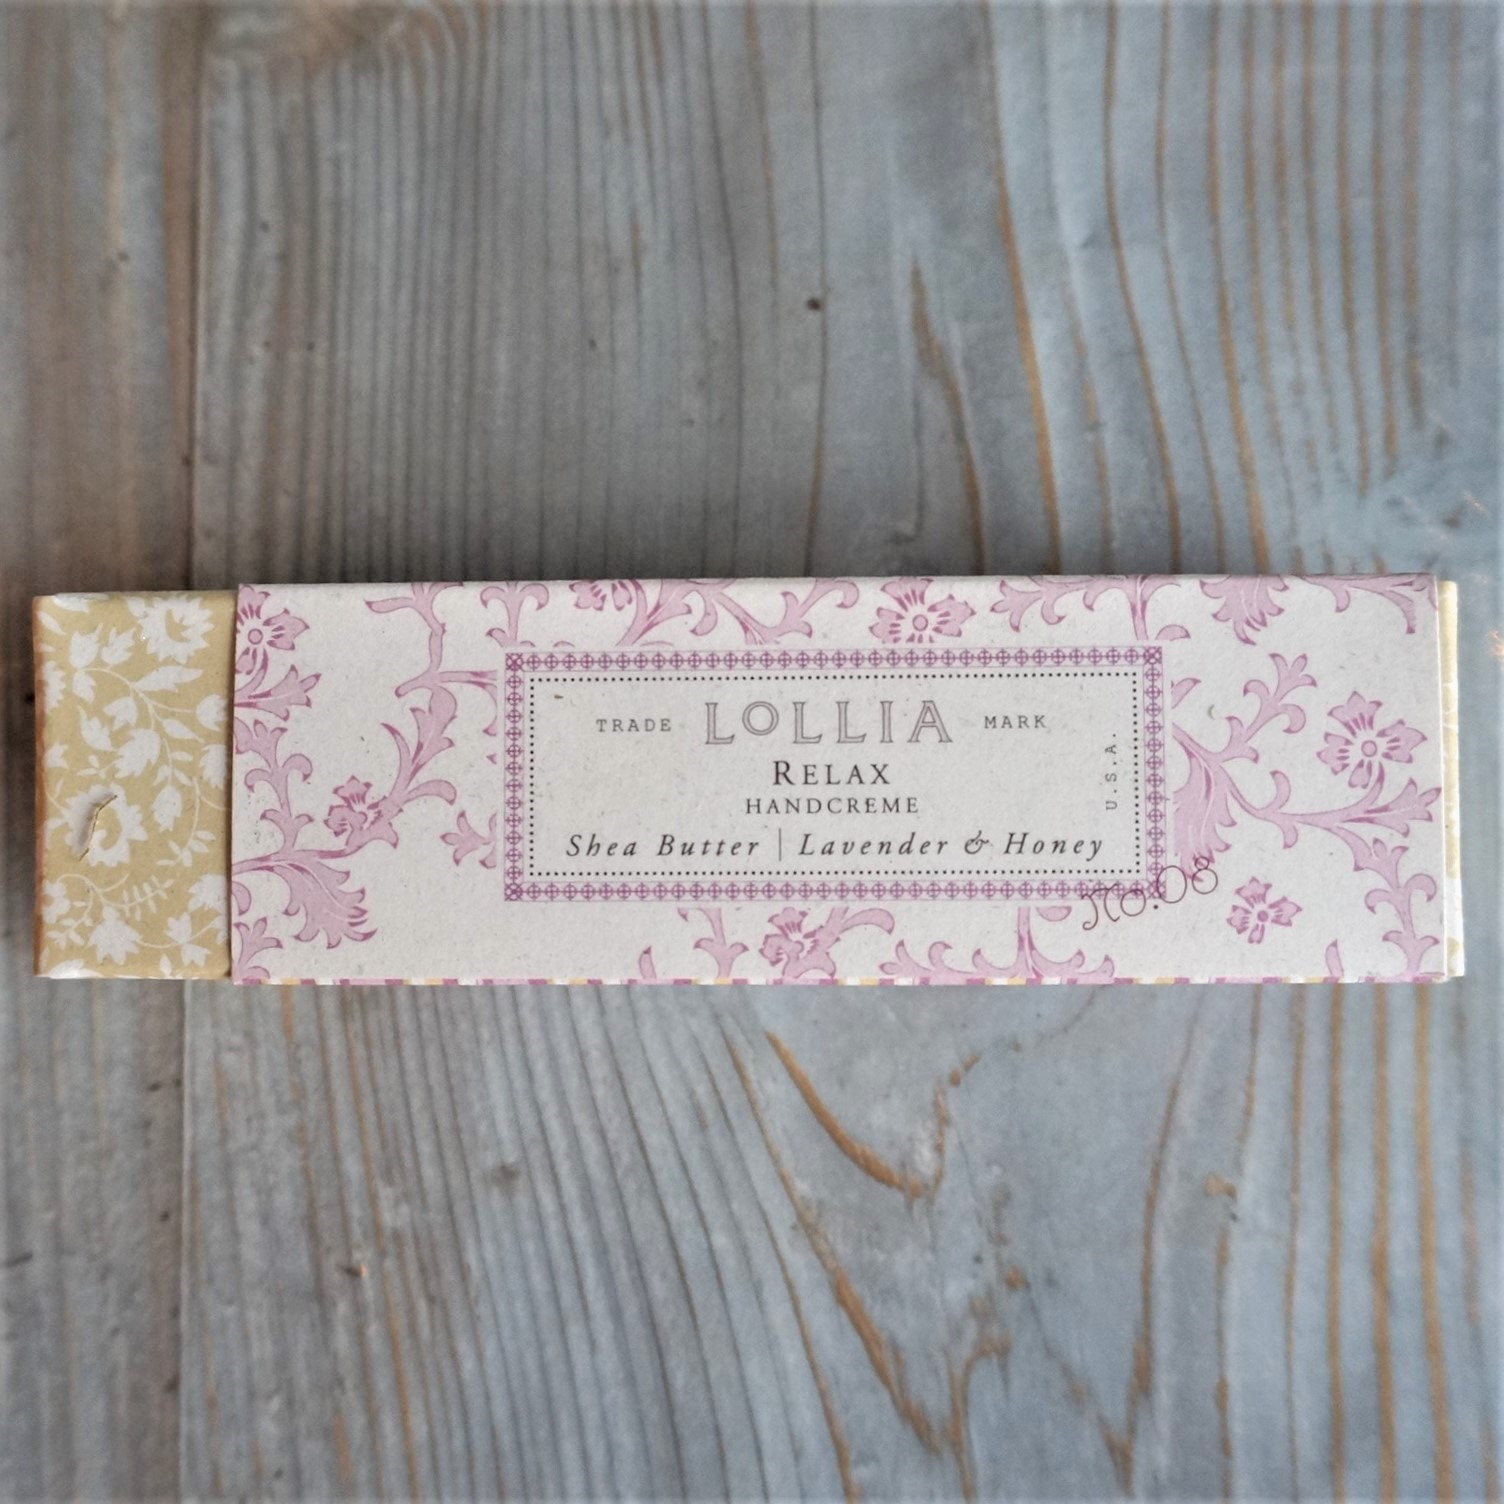 Lavender and Honey Lollia Handcreme